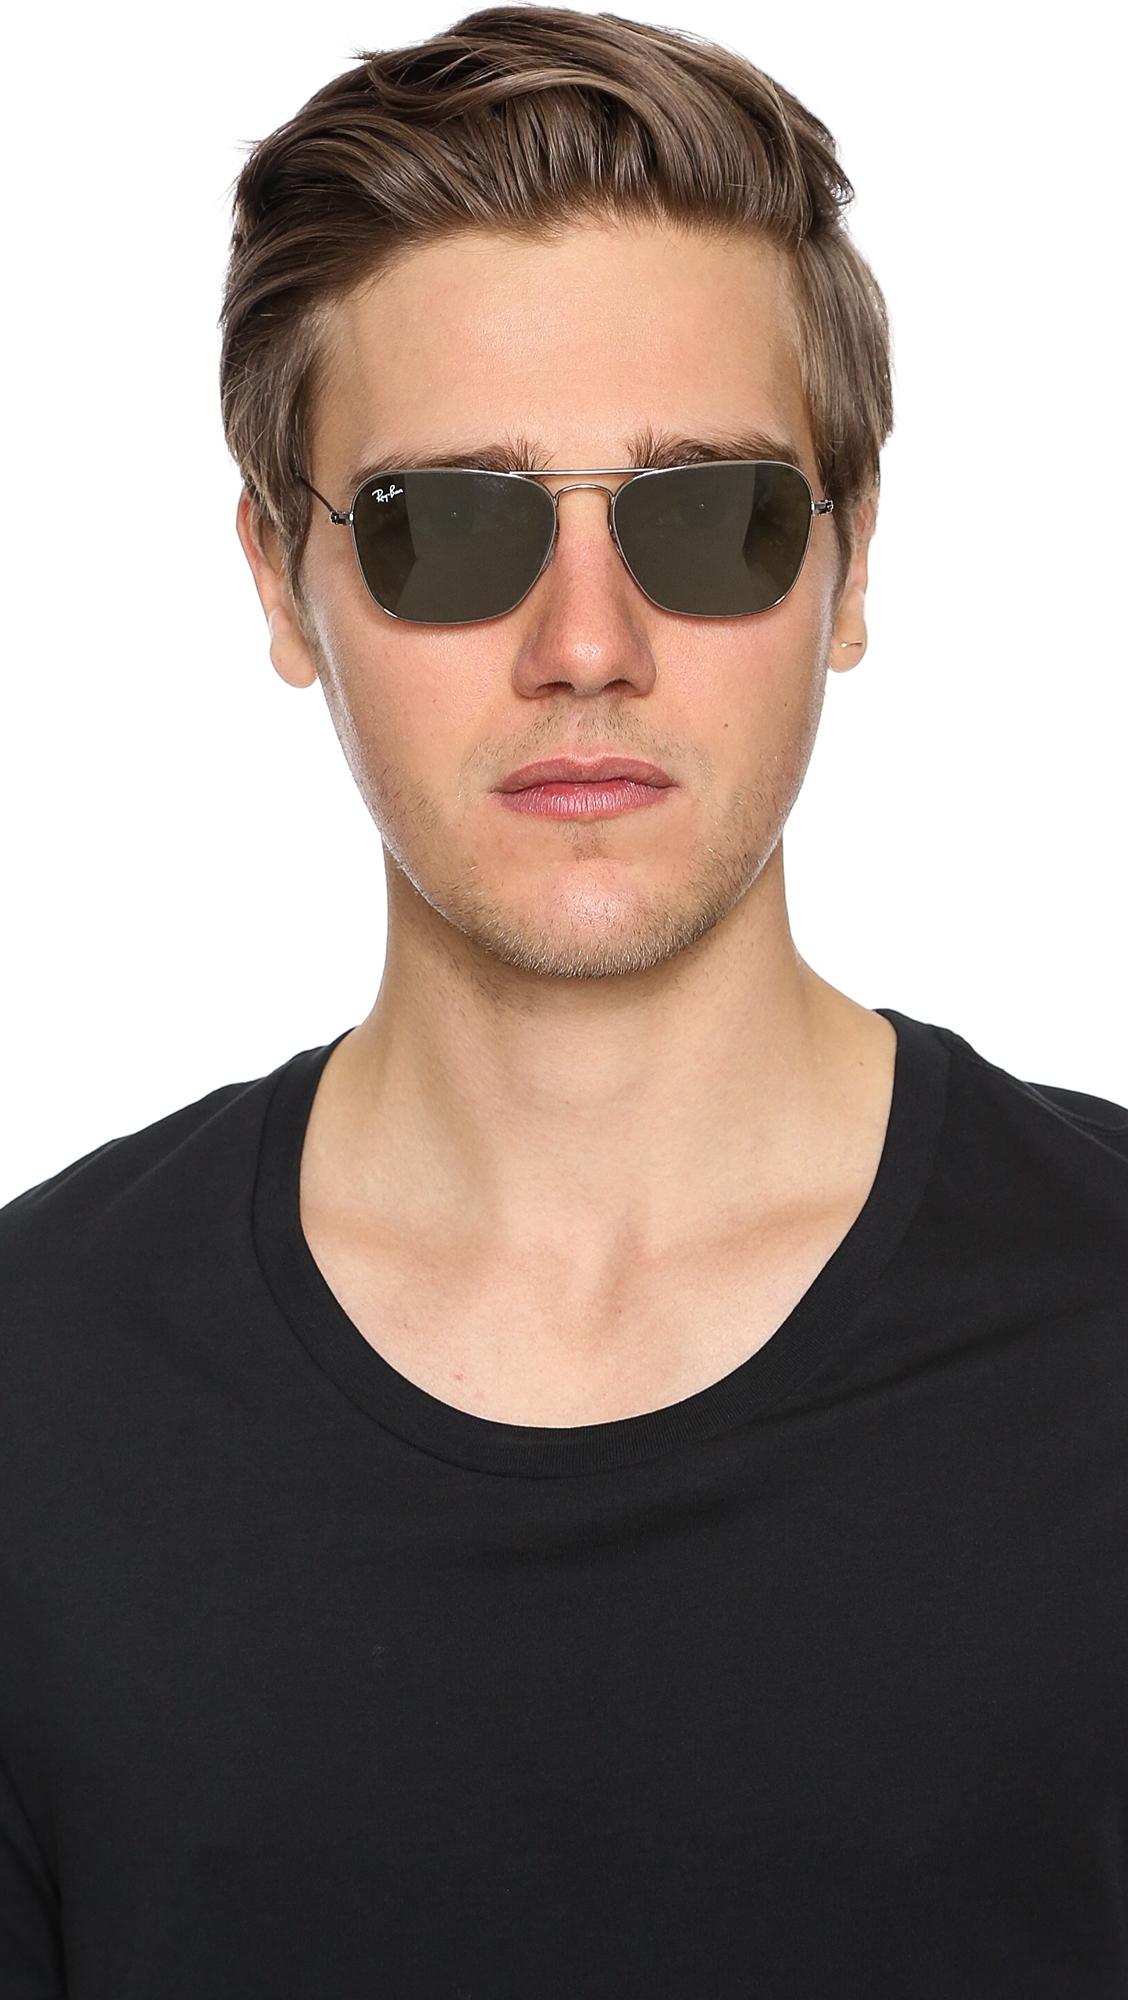 Ray-Ban Caravan Sunglasses in Metallic for Men - Lyst